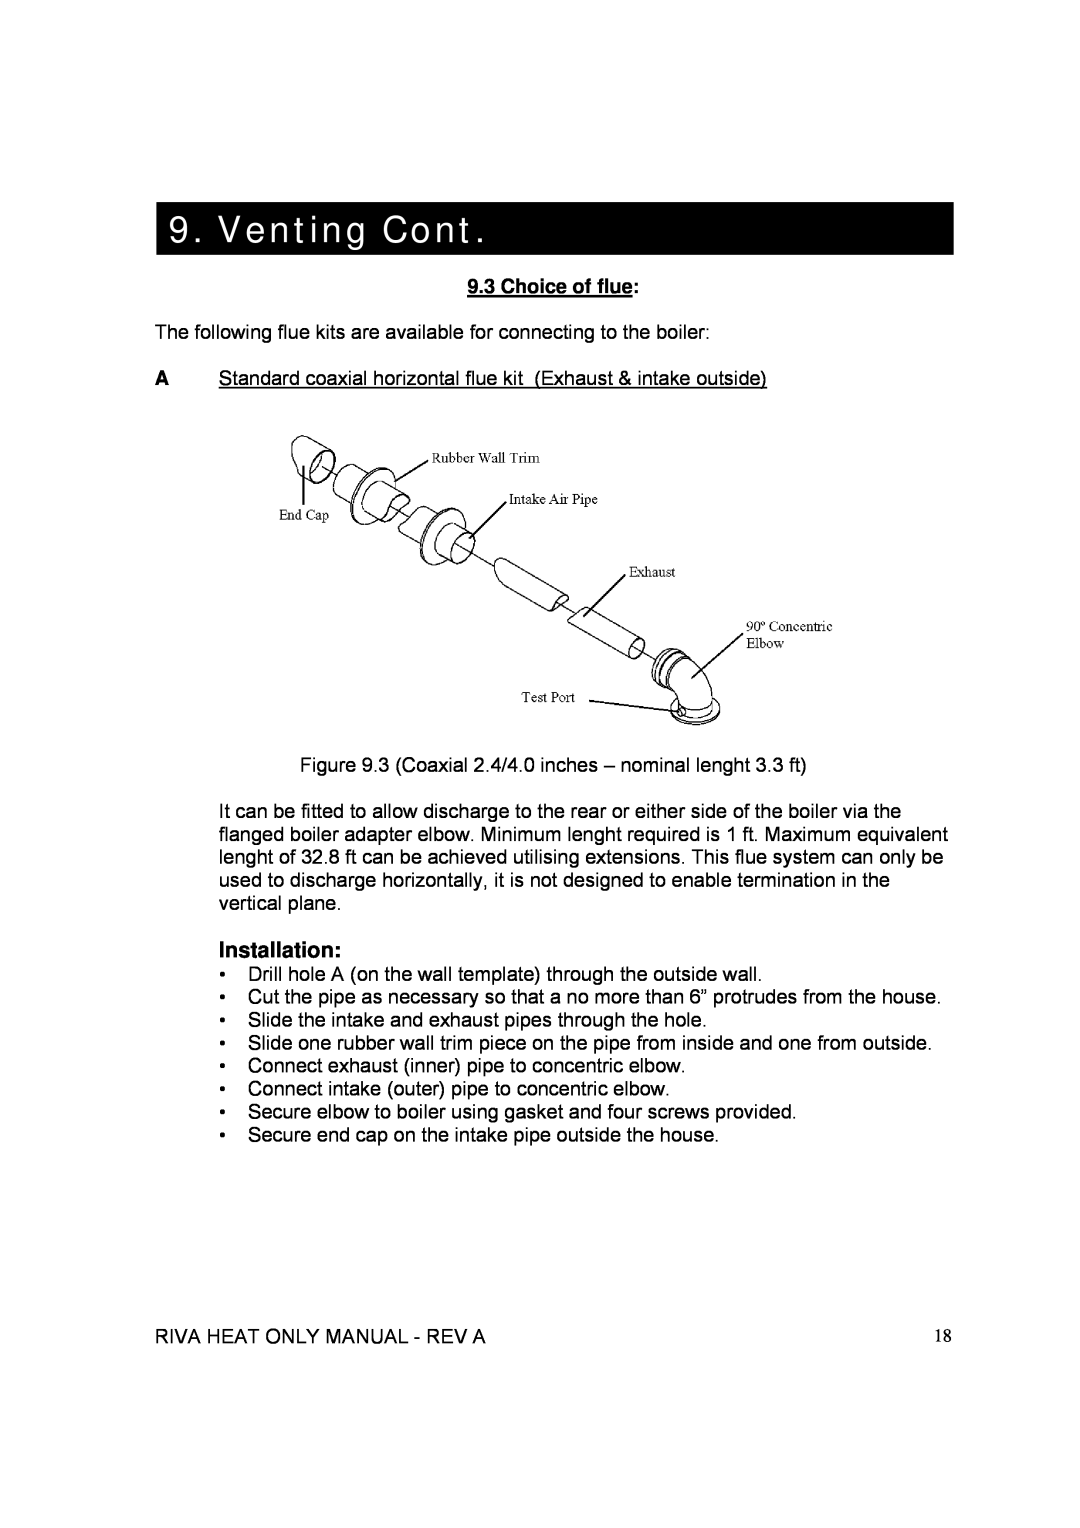 Verona WALL HUNG GAS BOILER manual Venting Cont, Installation, Choice of flue 